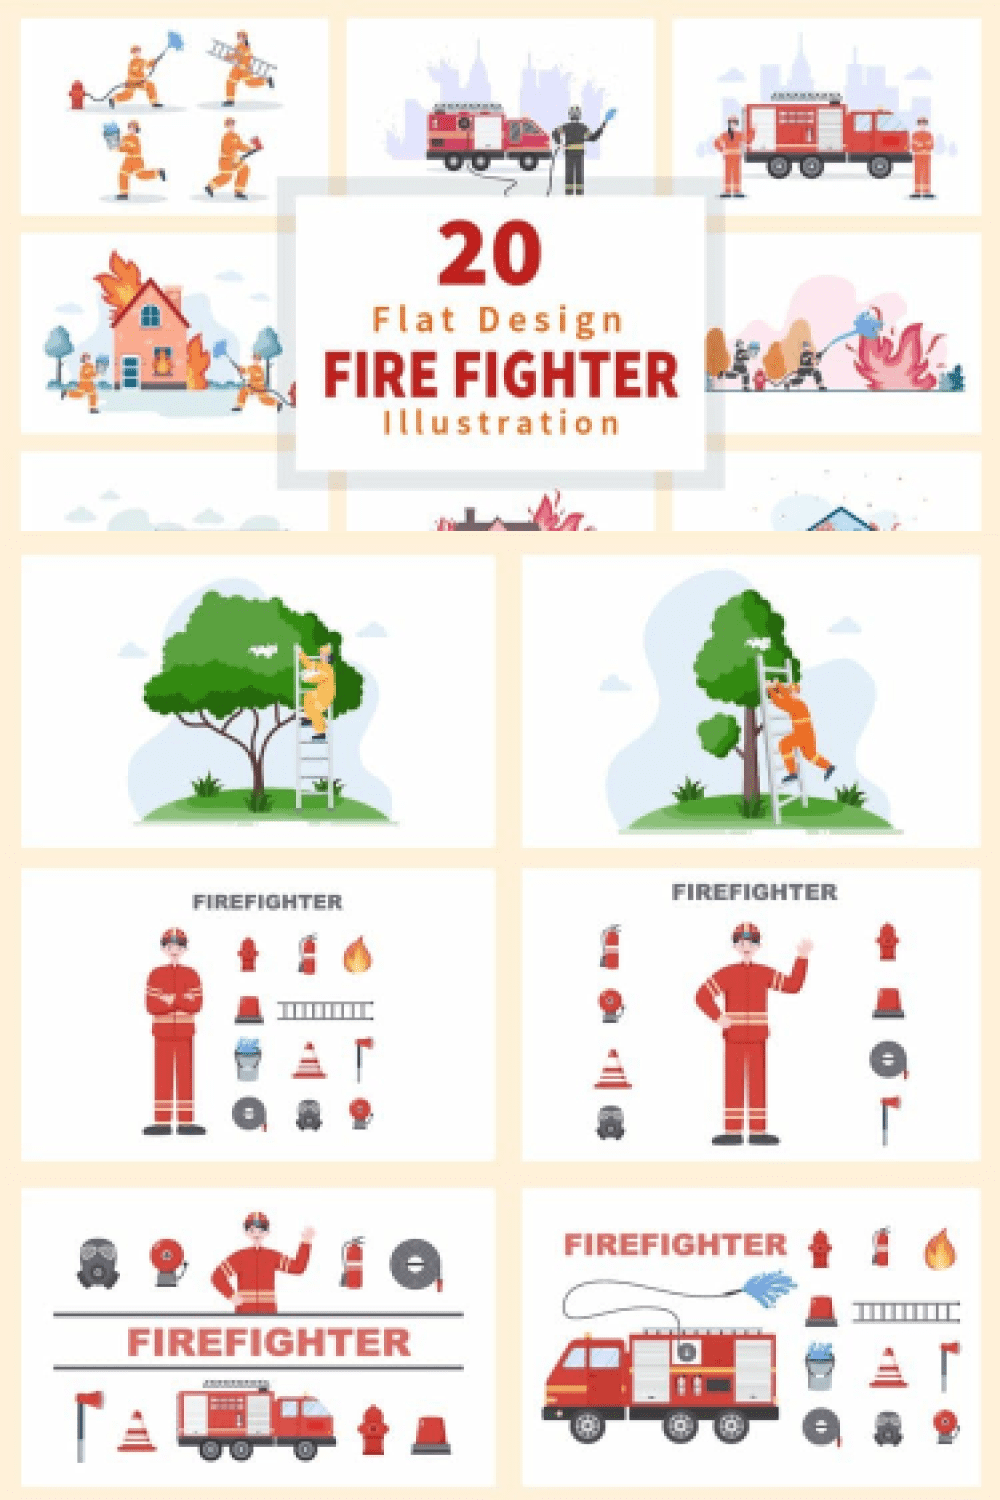 20 Group of Firefighters Illustration - MasterBundles - Pinterest Collage Image.